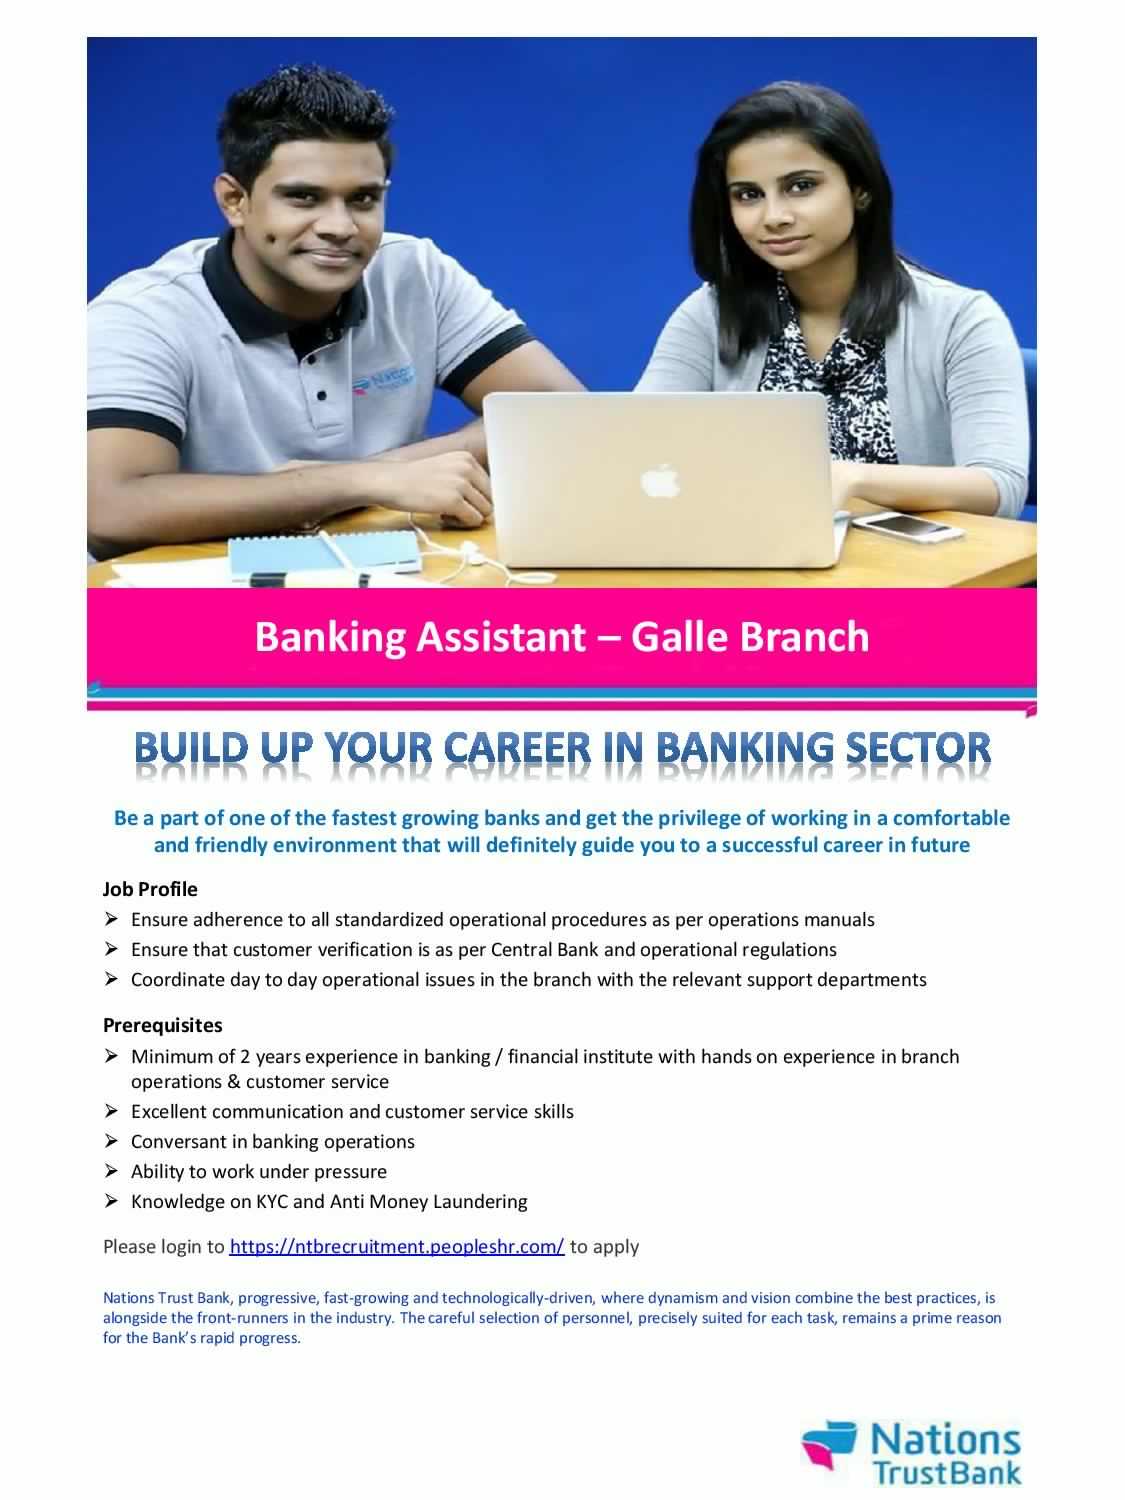 Banking Assistant Jobs Vacancies in Nations Trust Bank